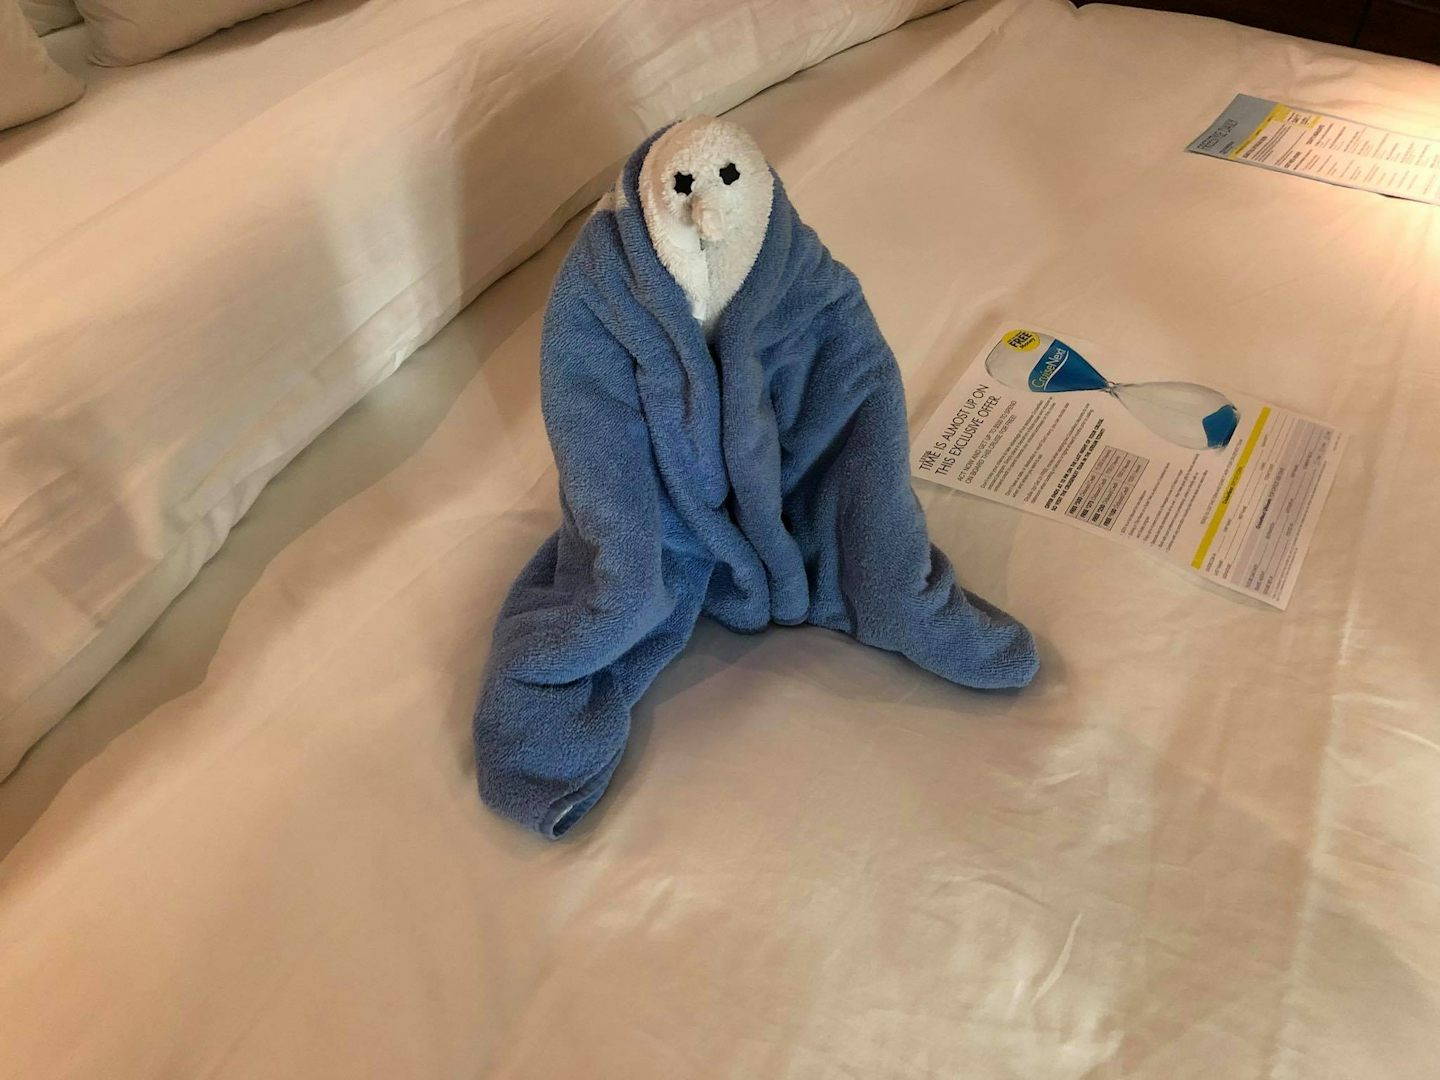 Our cabin steward made fun towel animals each night.